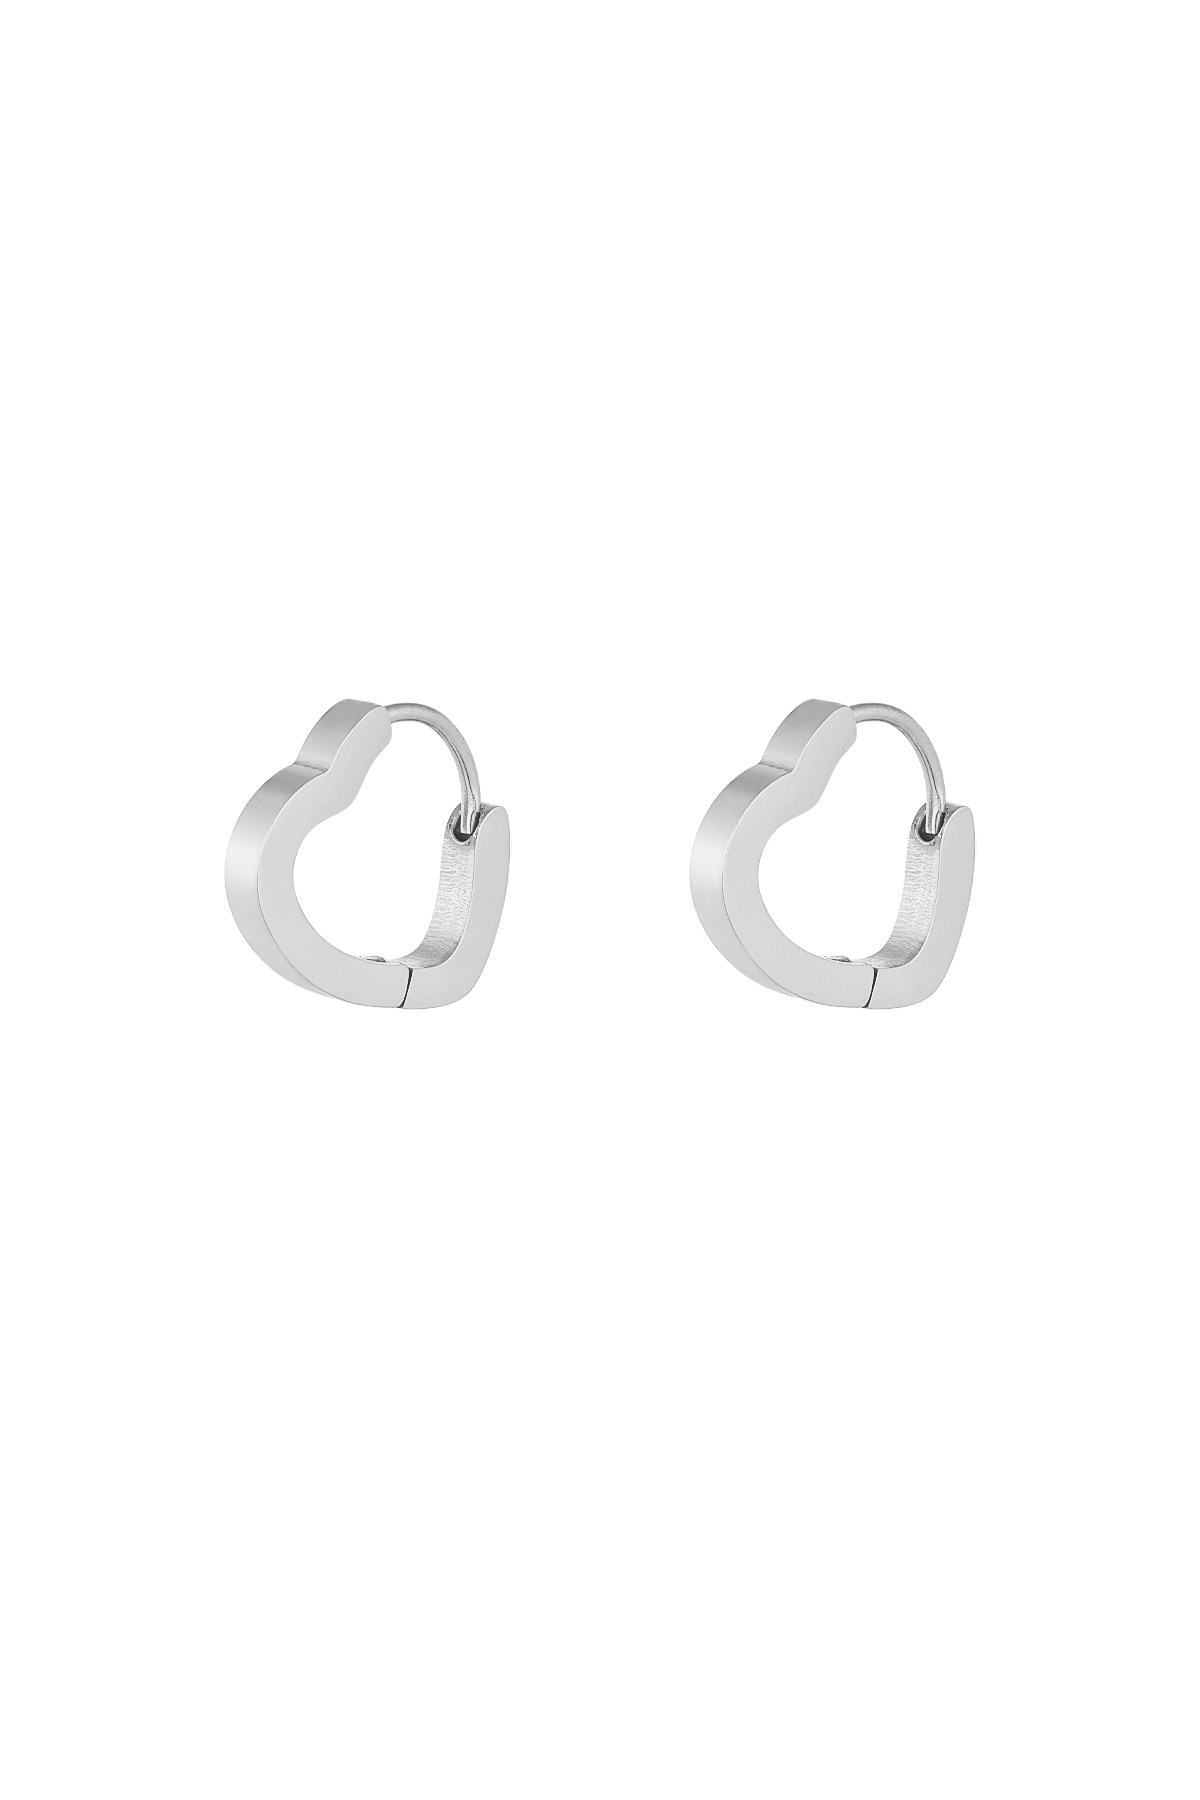 Basic earrings heart small - silver